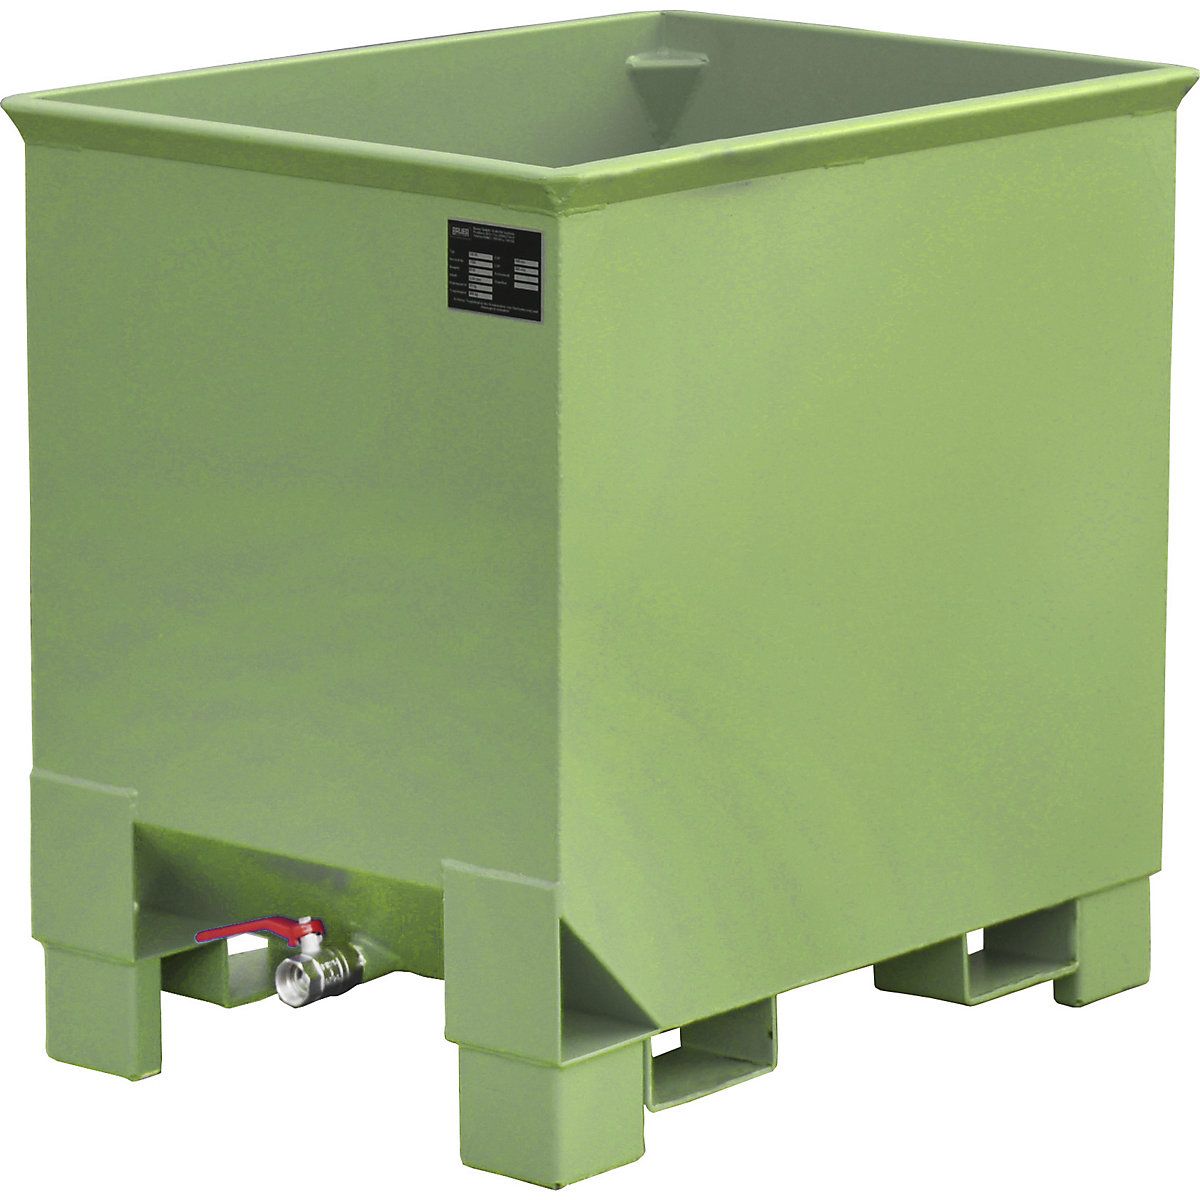 Zberný kontajner na piliny CS pre prepravné systémy – eurokraft pro, d x š x v 620 x 840 x 800 mm, rezedová zelená-5